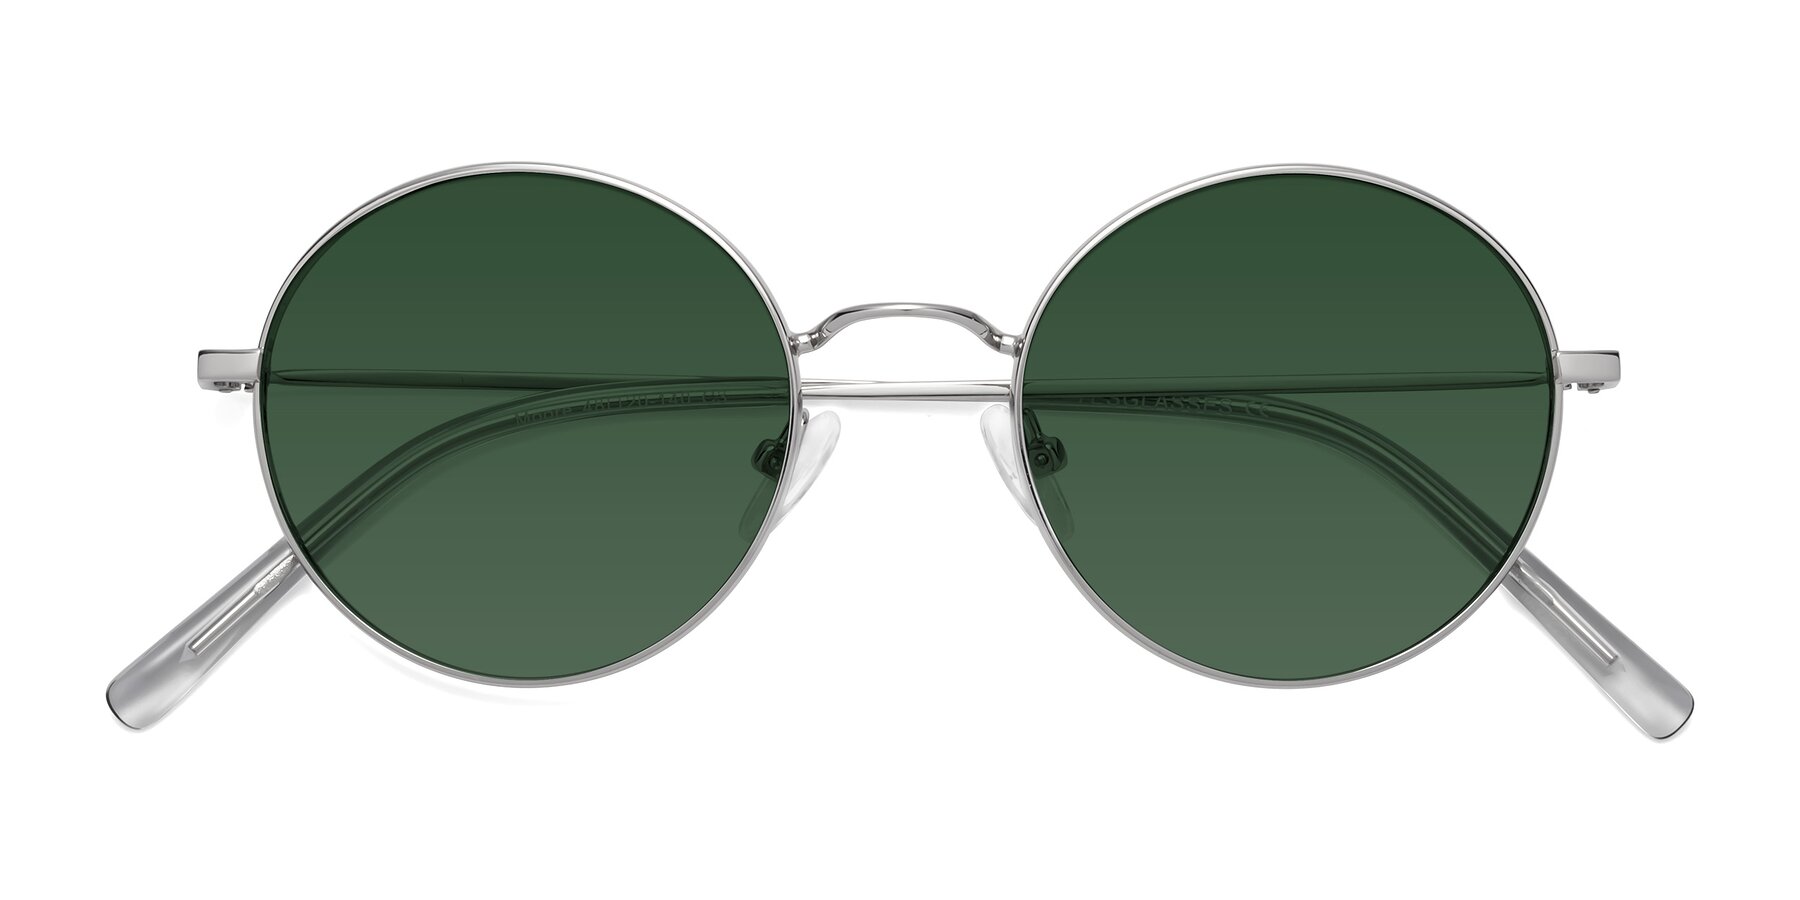 Retro Style Sunglasses w Green Crystal Color Frame - PC Lens | Retro  fashion, Fashion sunglasses, Green crystals